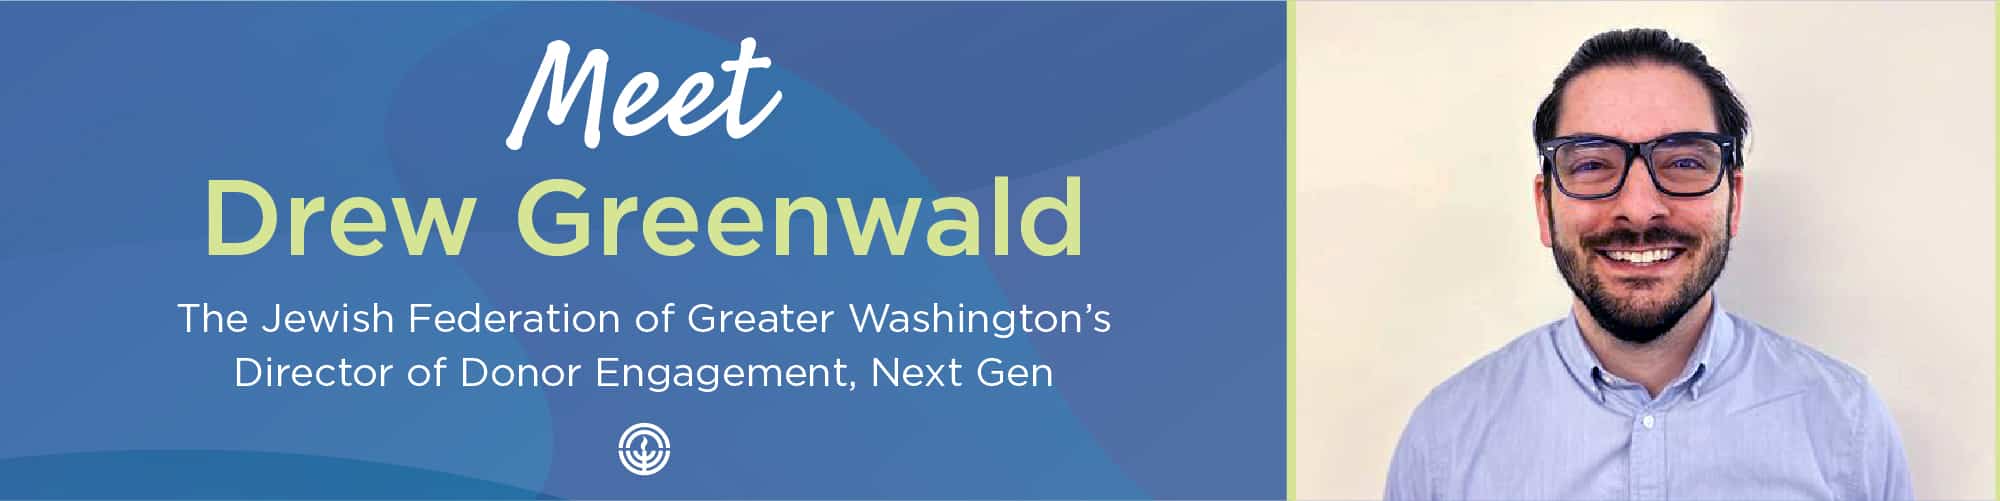 Meet Drew Greenwald, Federation’s New Director of Donor Engagement, Next Gen